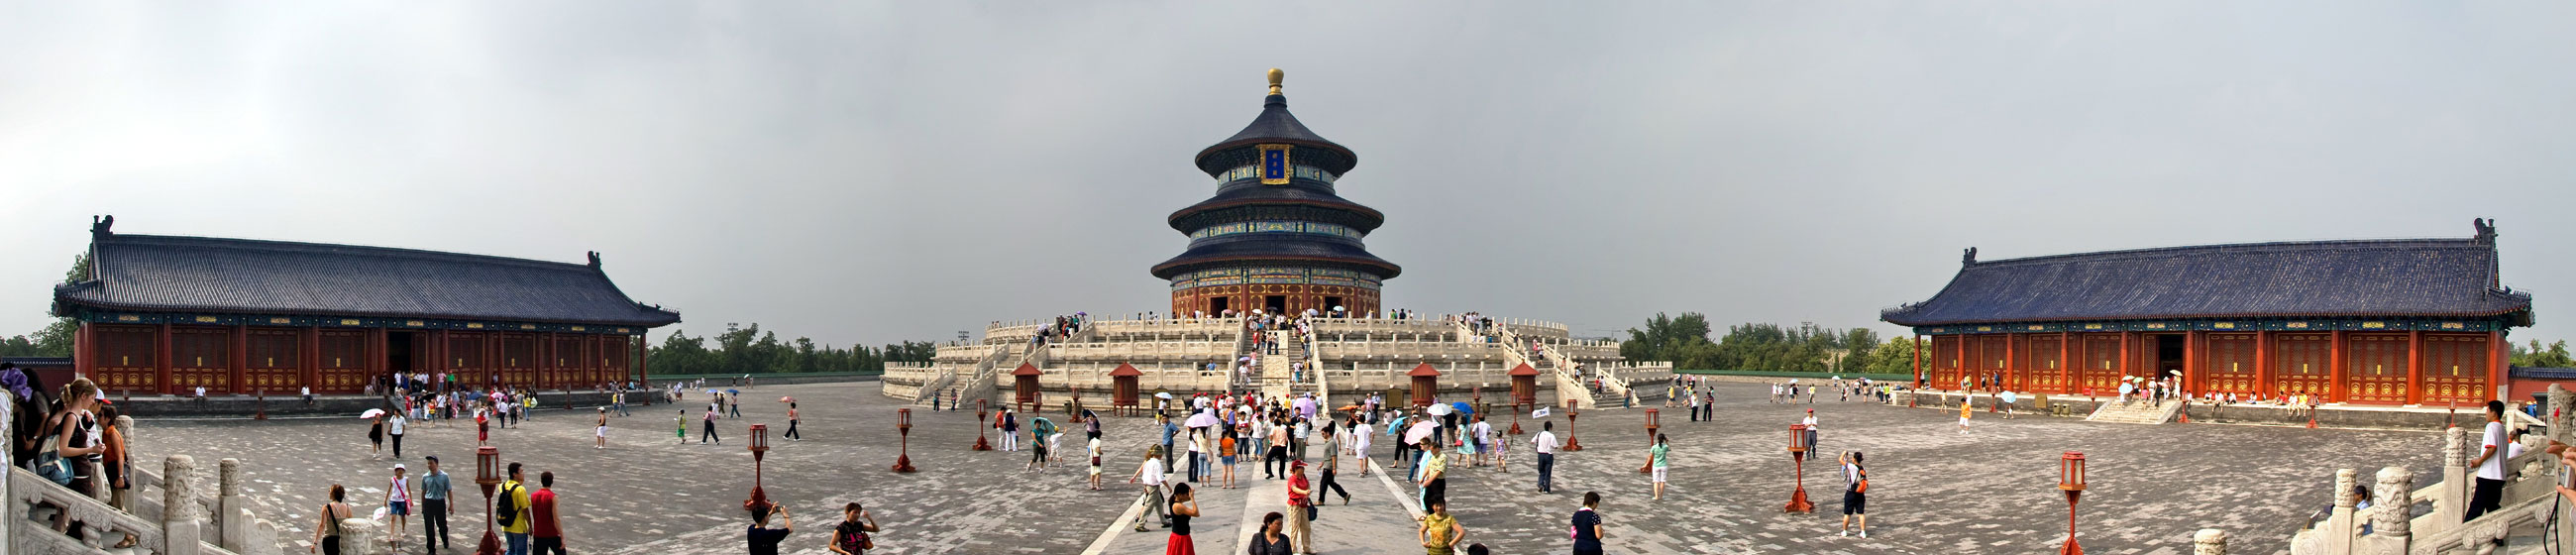 Пекин храм неба панорама